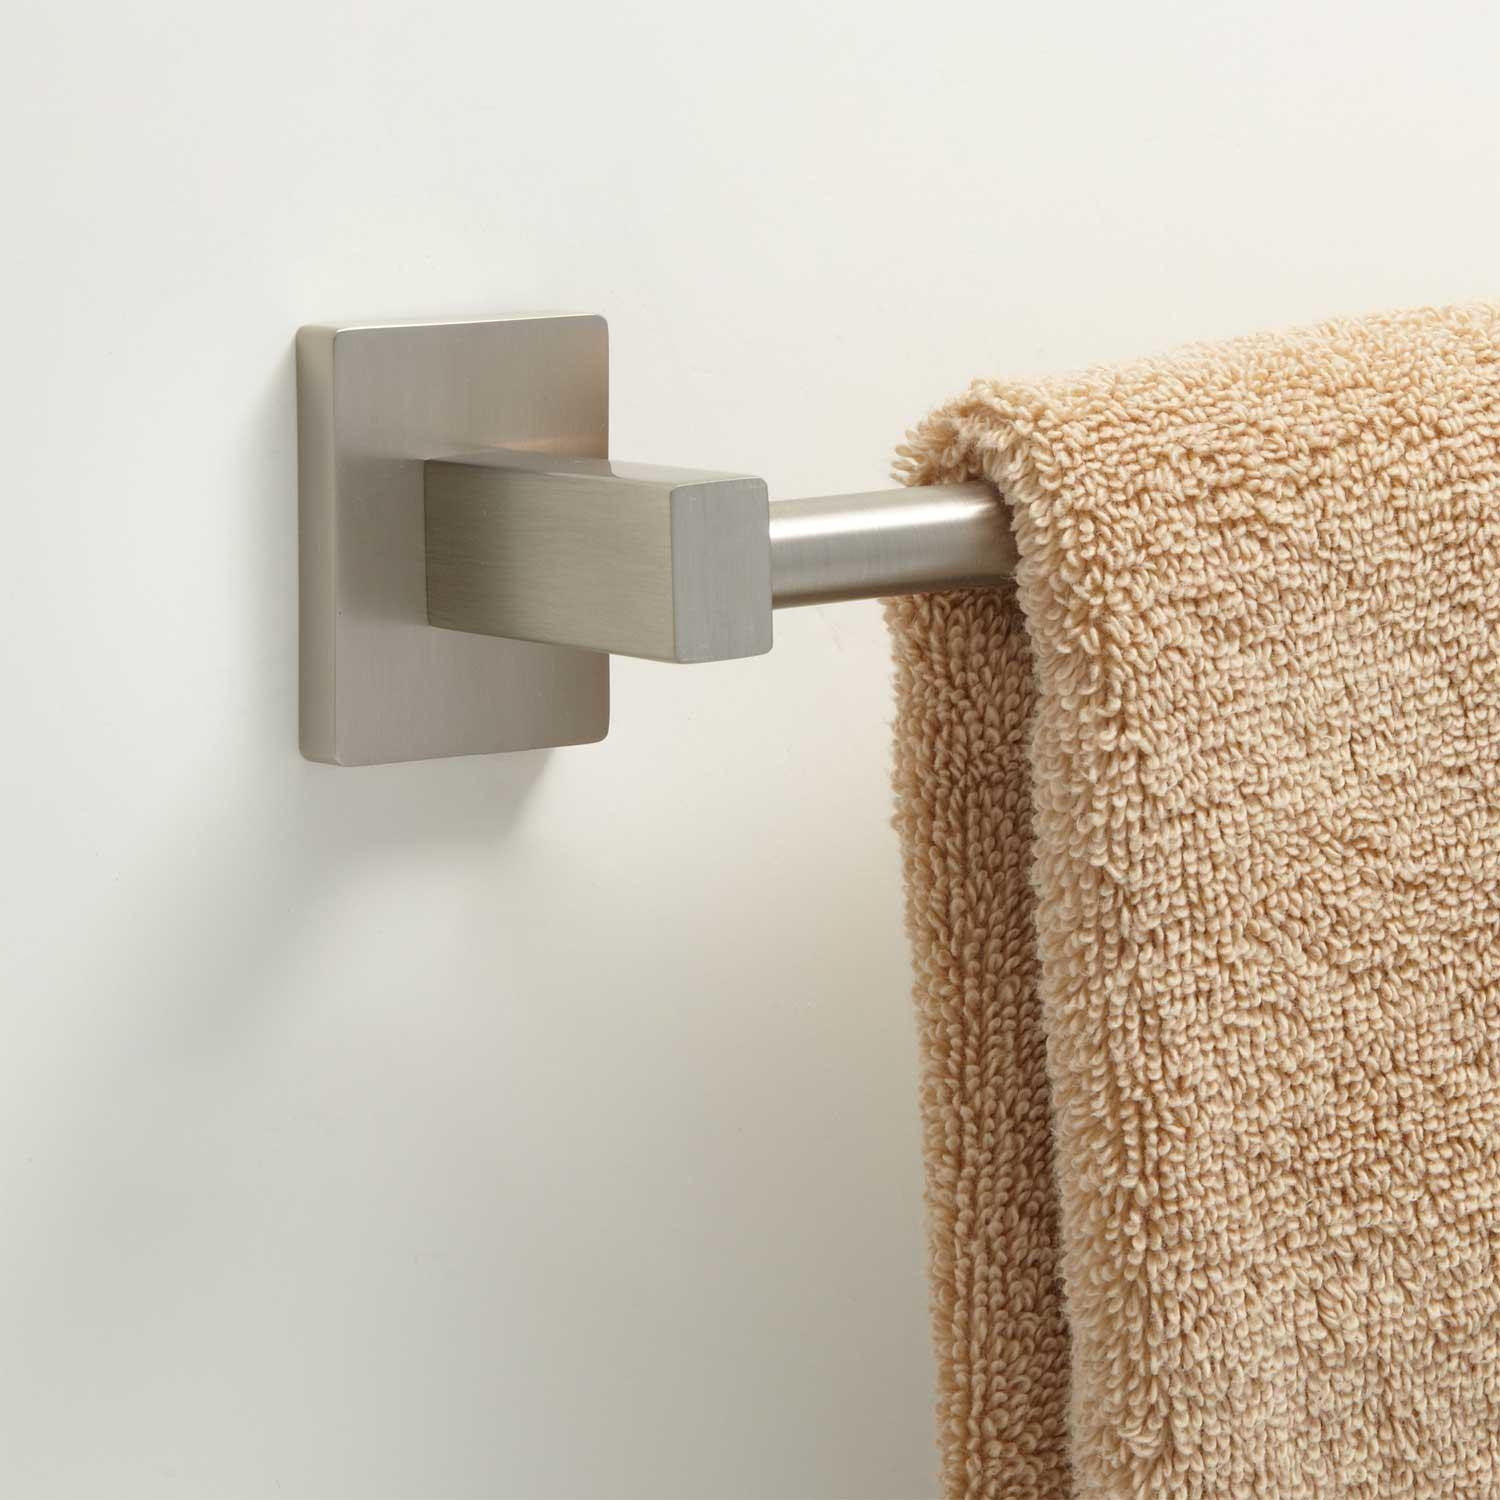 Best ideas about Bathroom Towel Bars
. Save or Pin Bathroom Towel Bar Now.